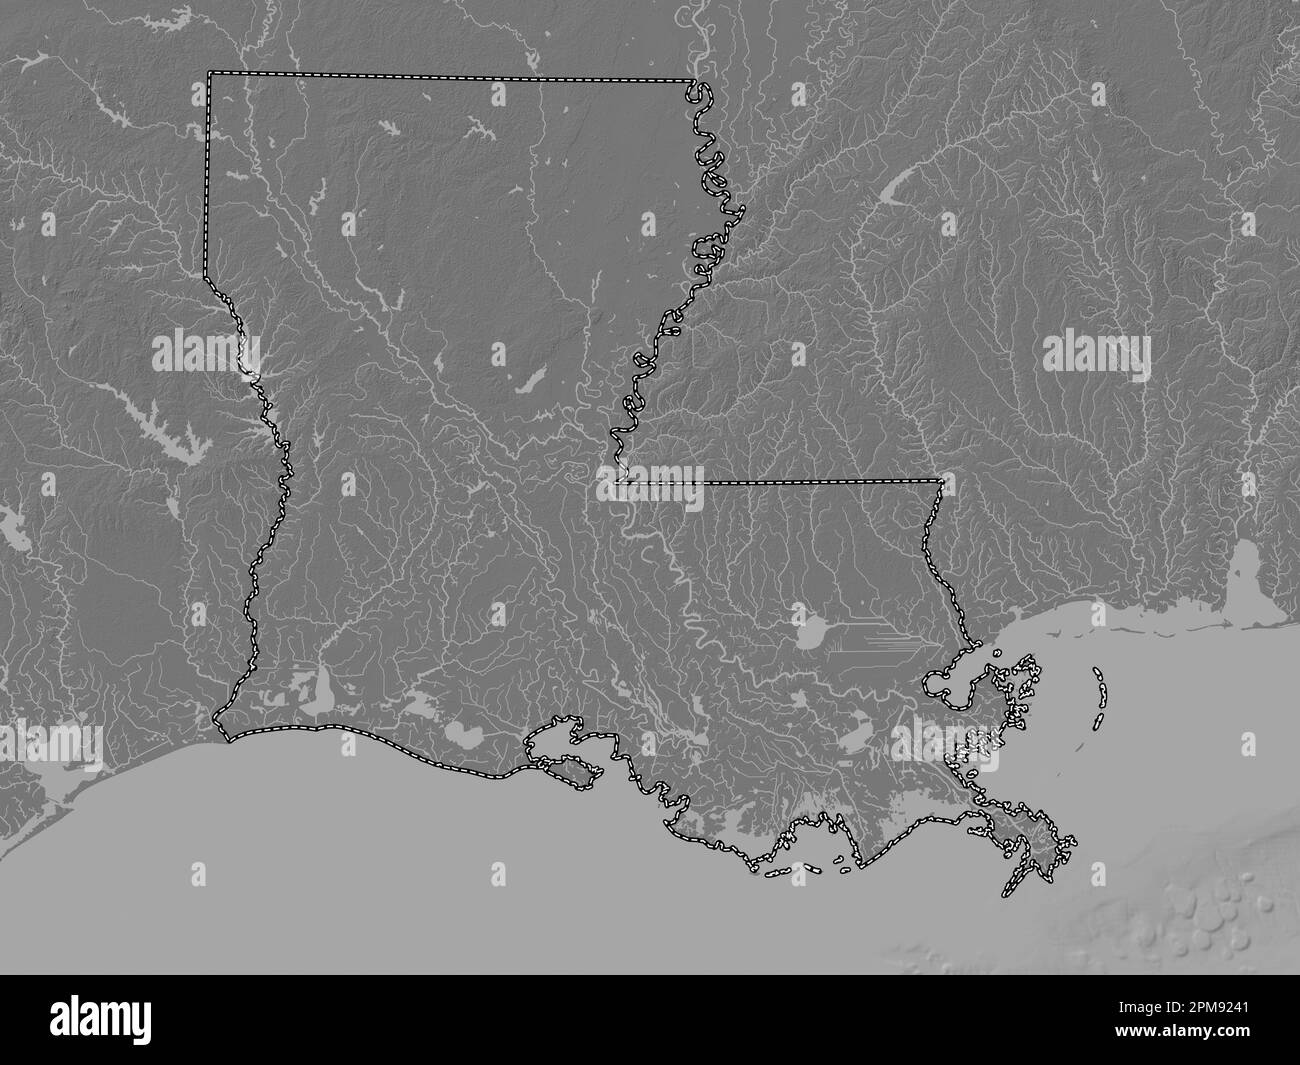 Louisiana Black and White Stock Photos & Images - Alamy